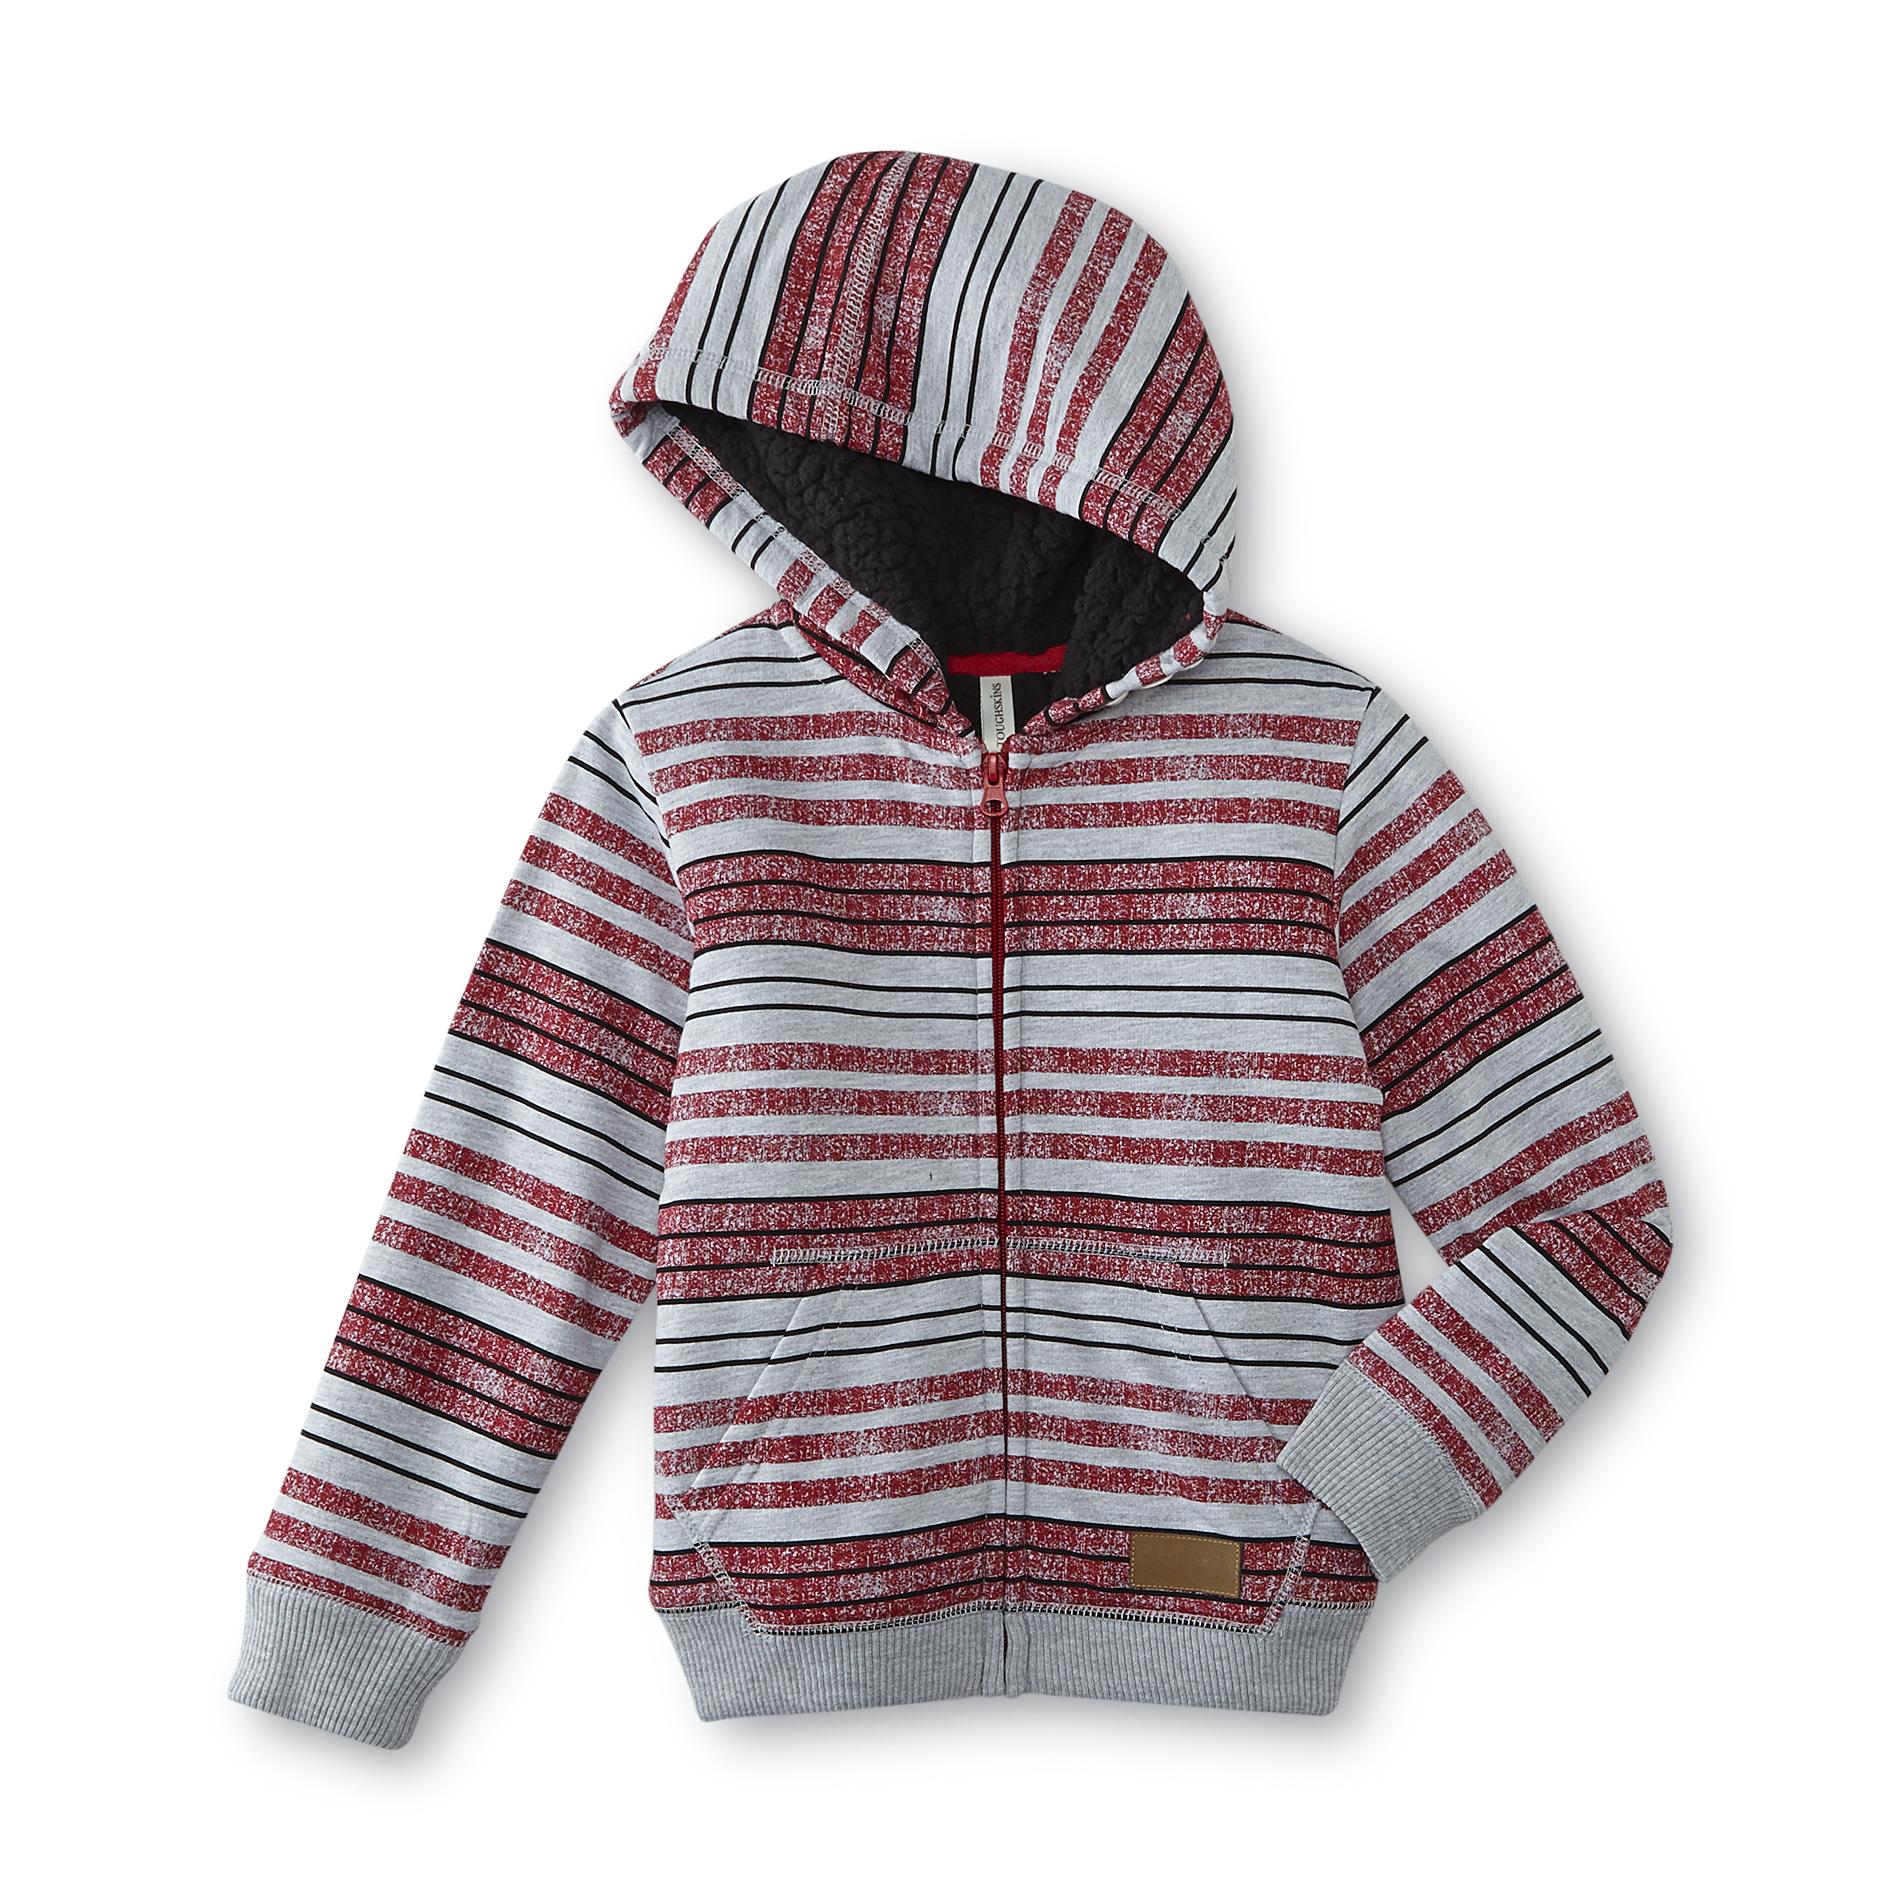 Toughskins Infant & Toddler Boy's Lined Hoodie Jacket - Striped